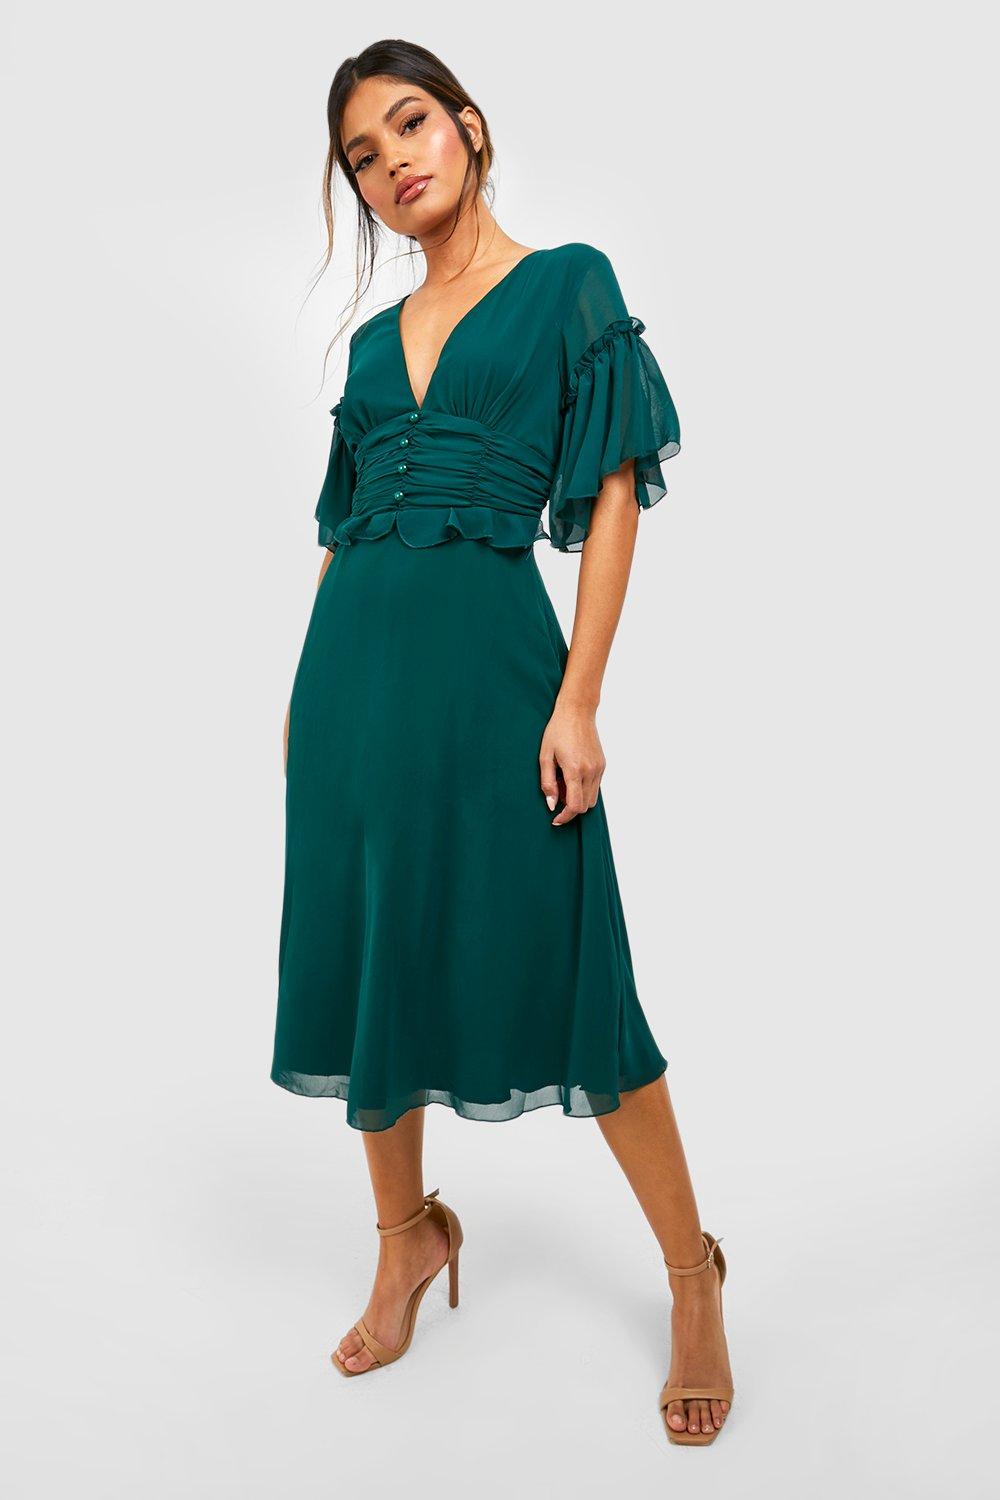 Khaki ☀ Mint Green Dresses | boohoo ...